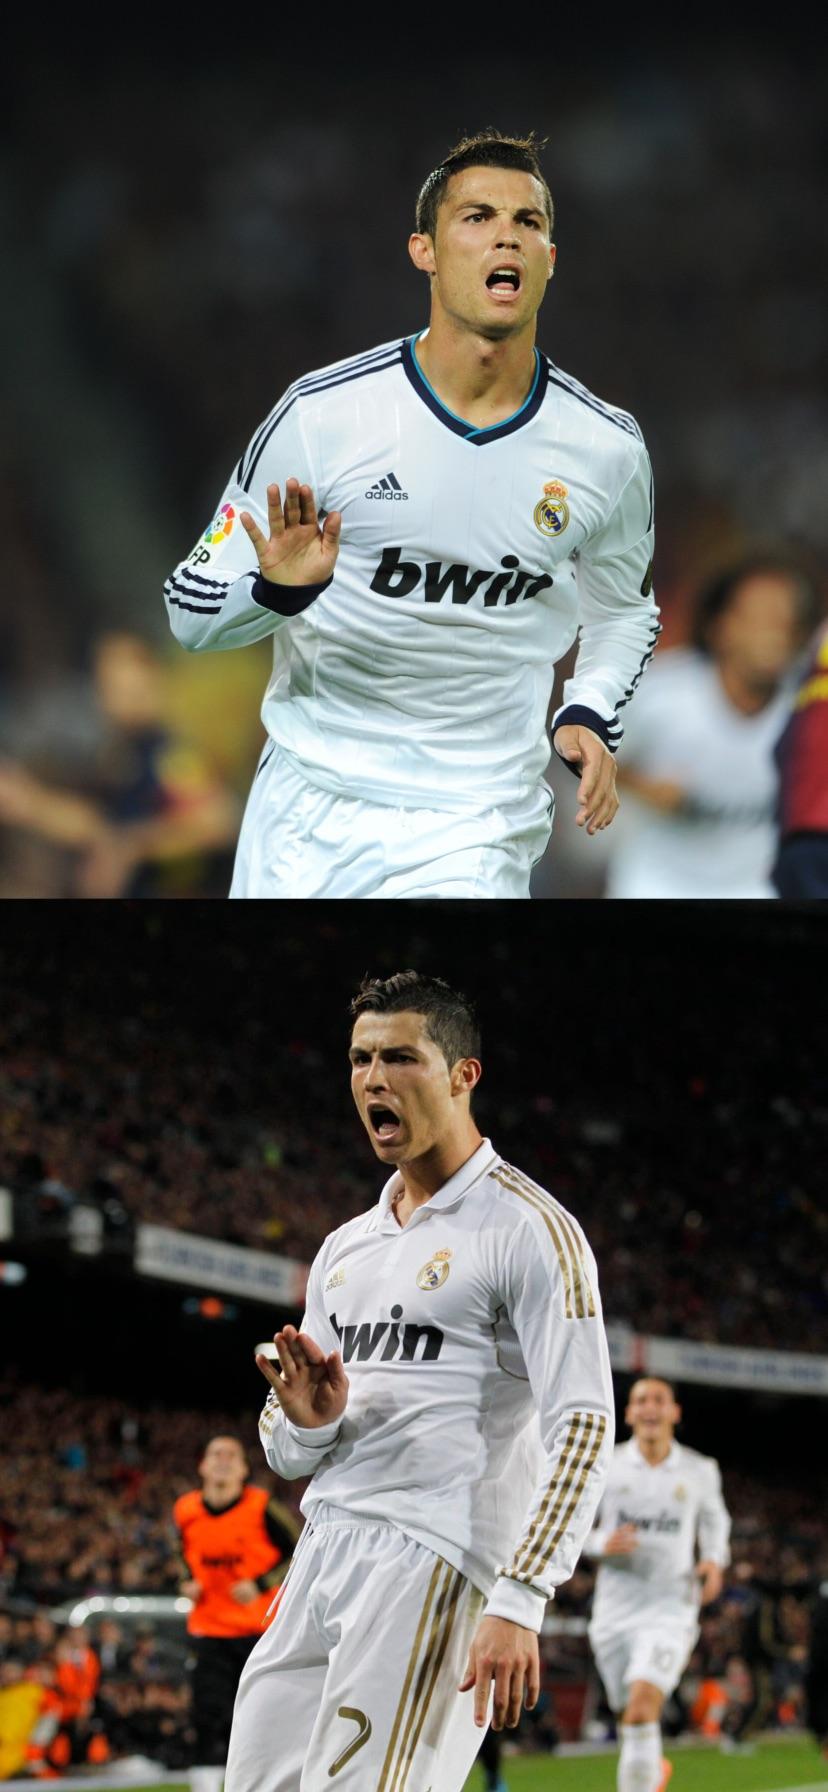  Cristiano Ronaldo Hintergrundbild 828x1792. Here are two Cristiano Ronaldo wallpaper i made the last night, i hope you enjoy them :)